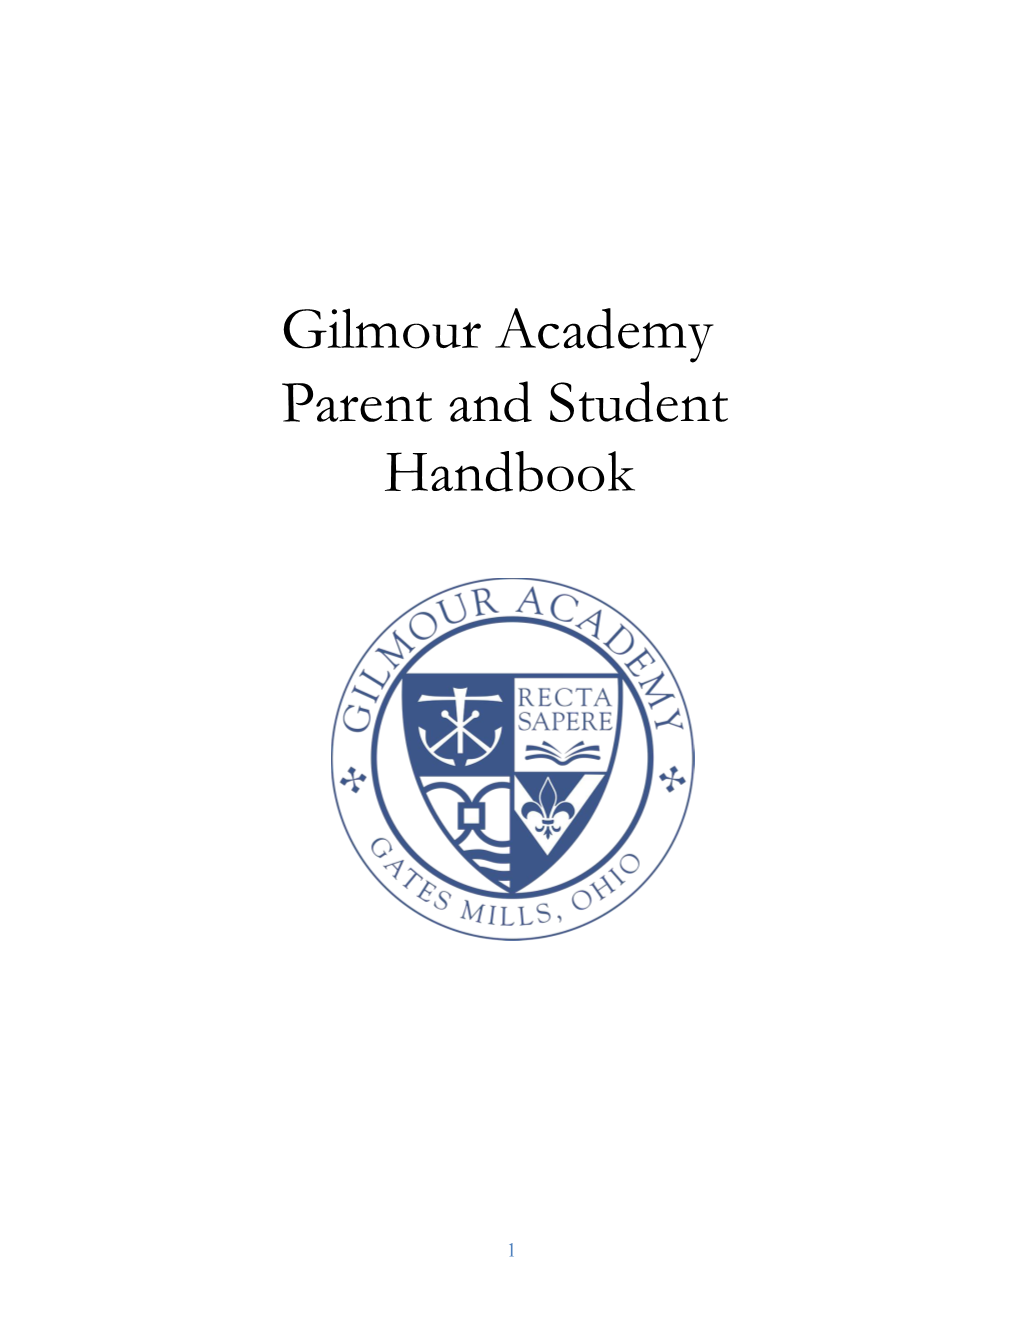 Gilmour Academy Parent and Student Handbook